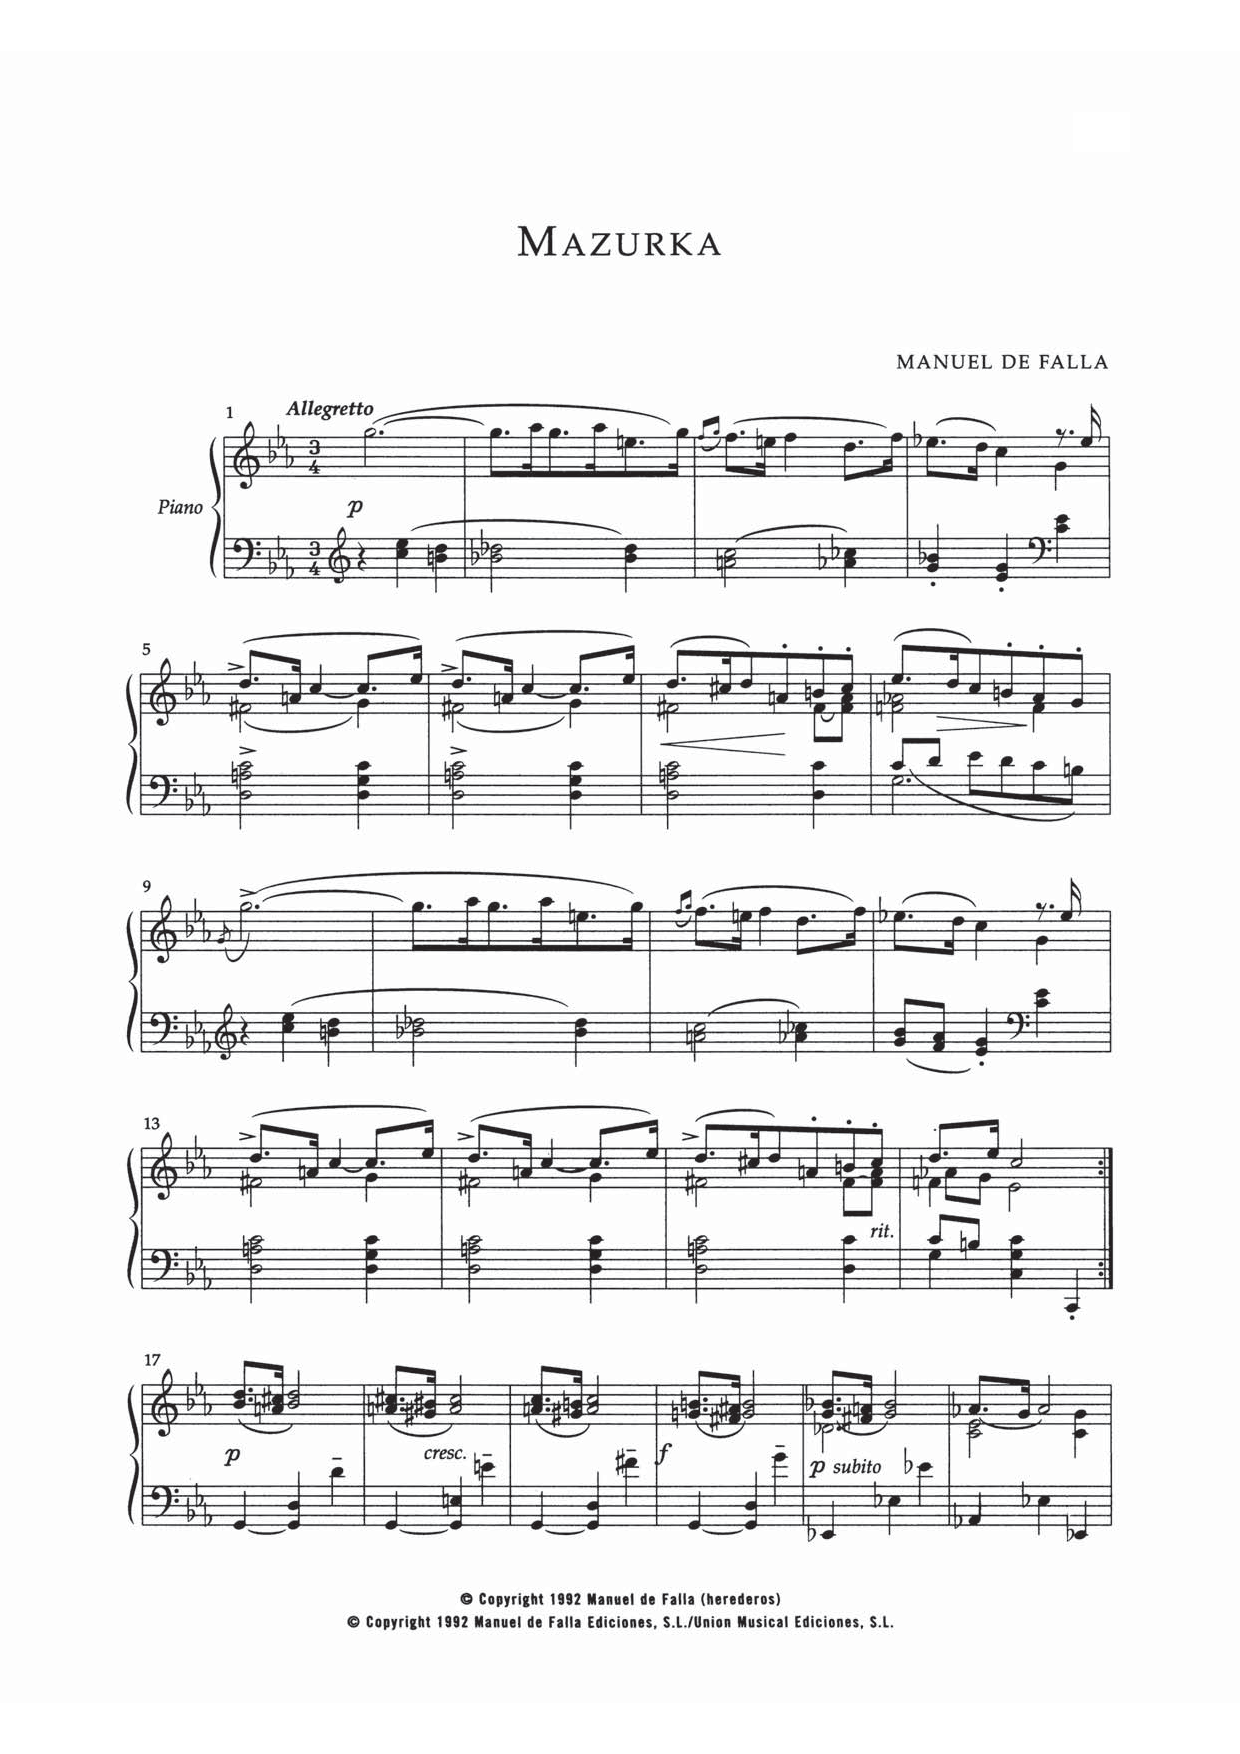 Download Manuel De Falla Mazurka In Do Menor Sheet Music and learn how to play Piano PDF digital score in minutes